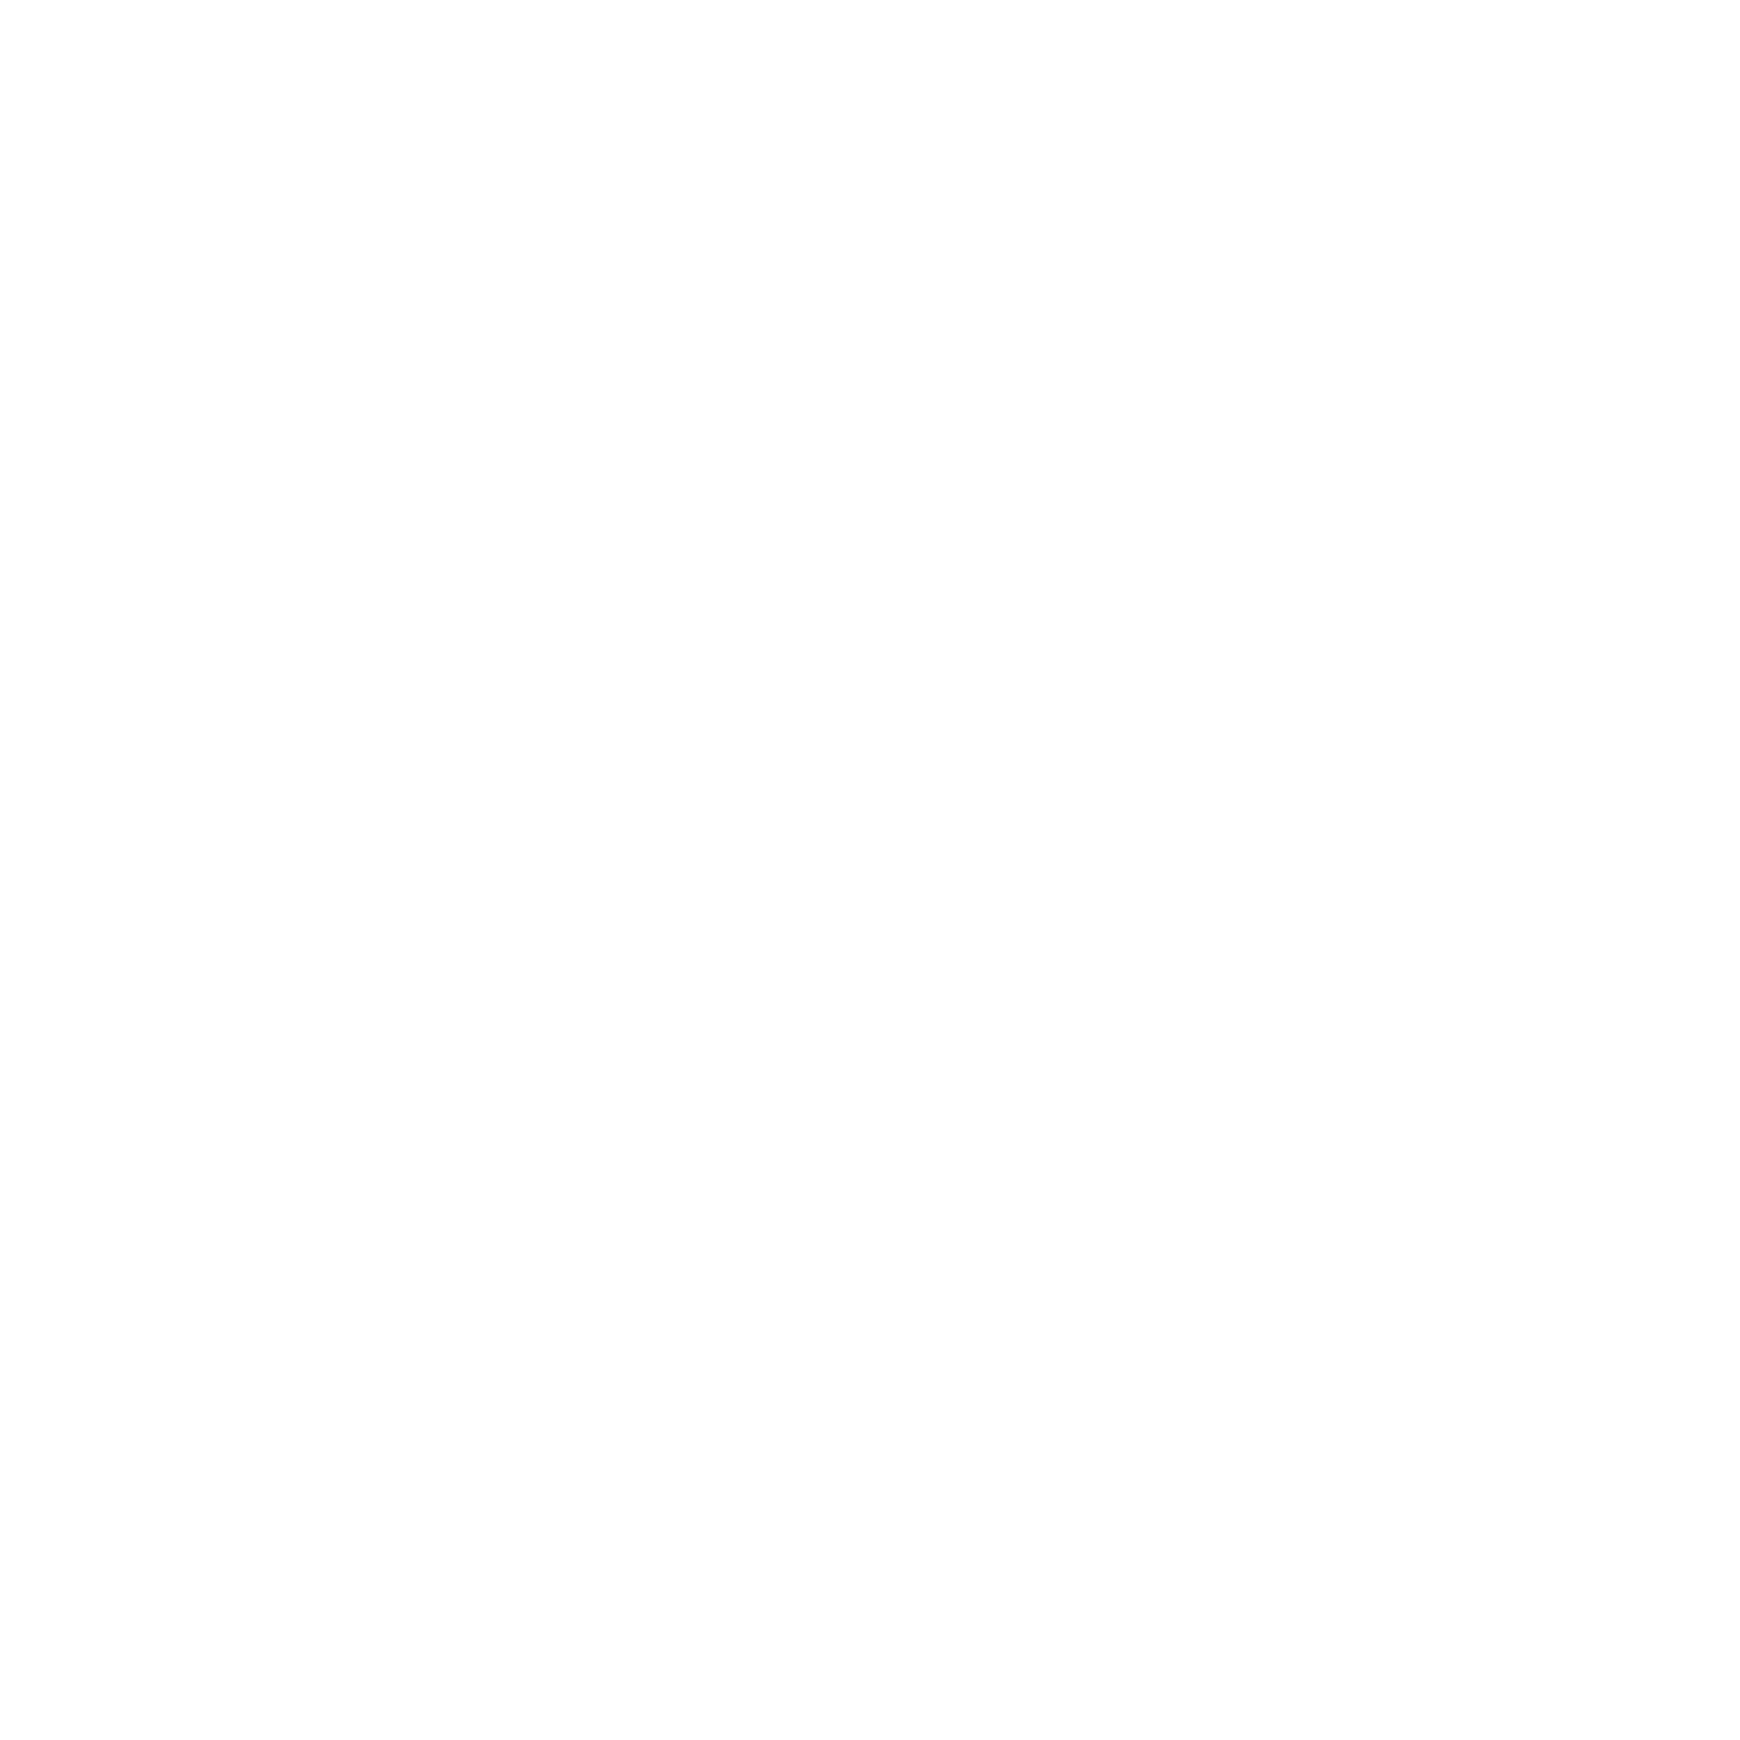 GS Drive